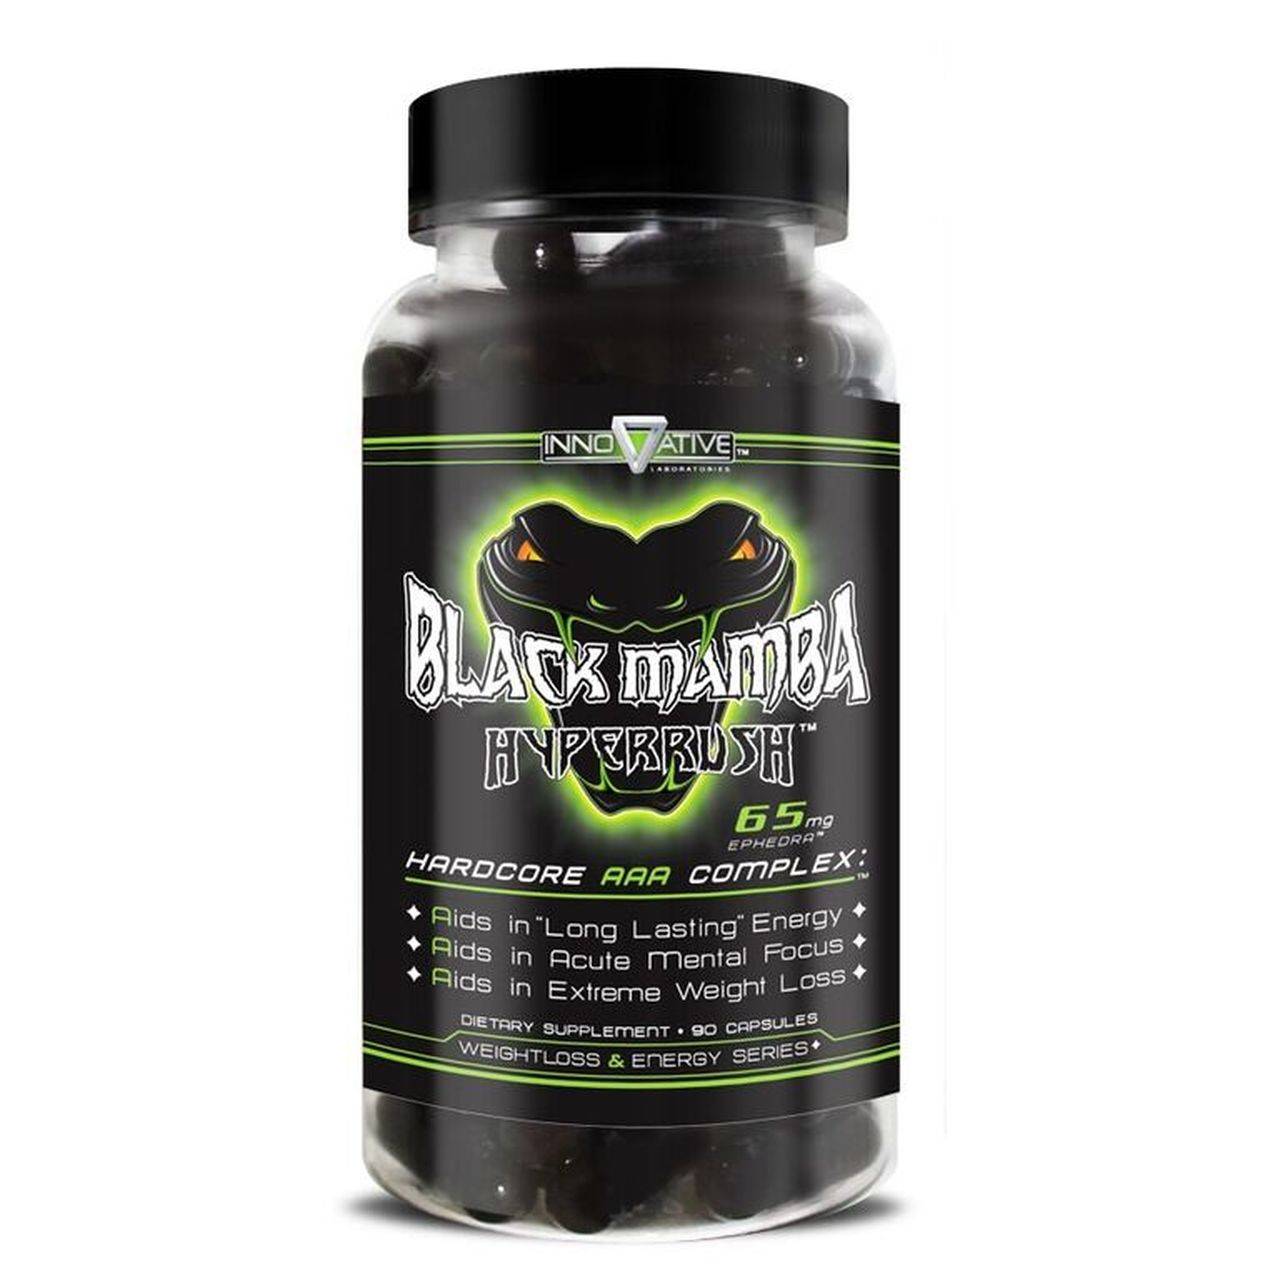 Жиросжигатель черная мамба (black mamba hyperrush) от innovative labs — sportwiki энциклопедия